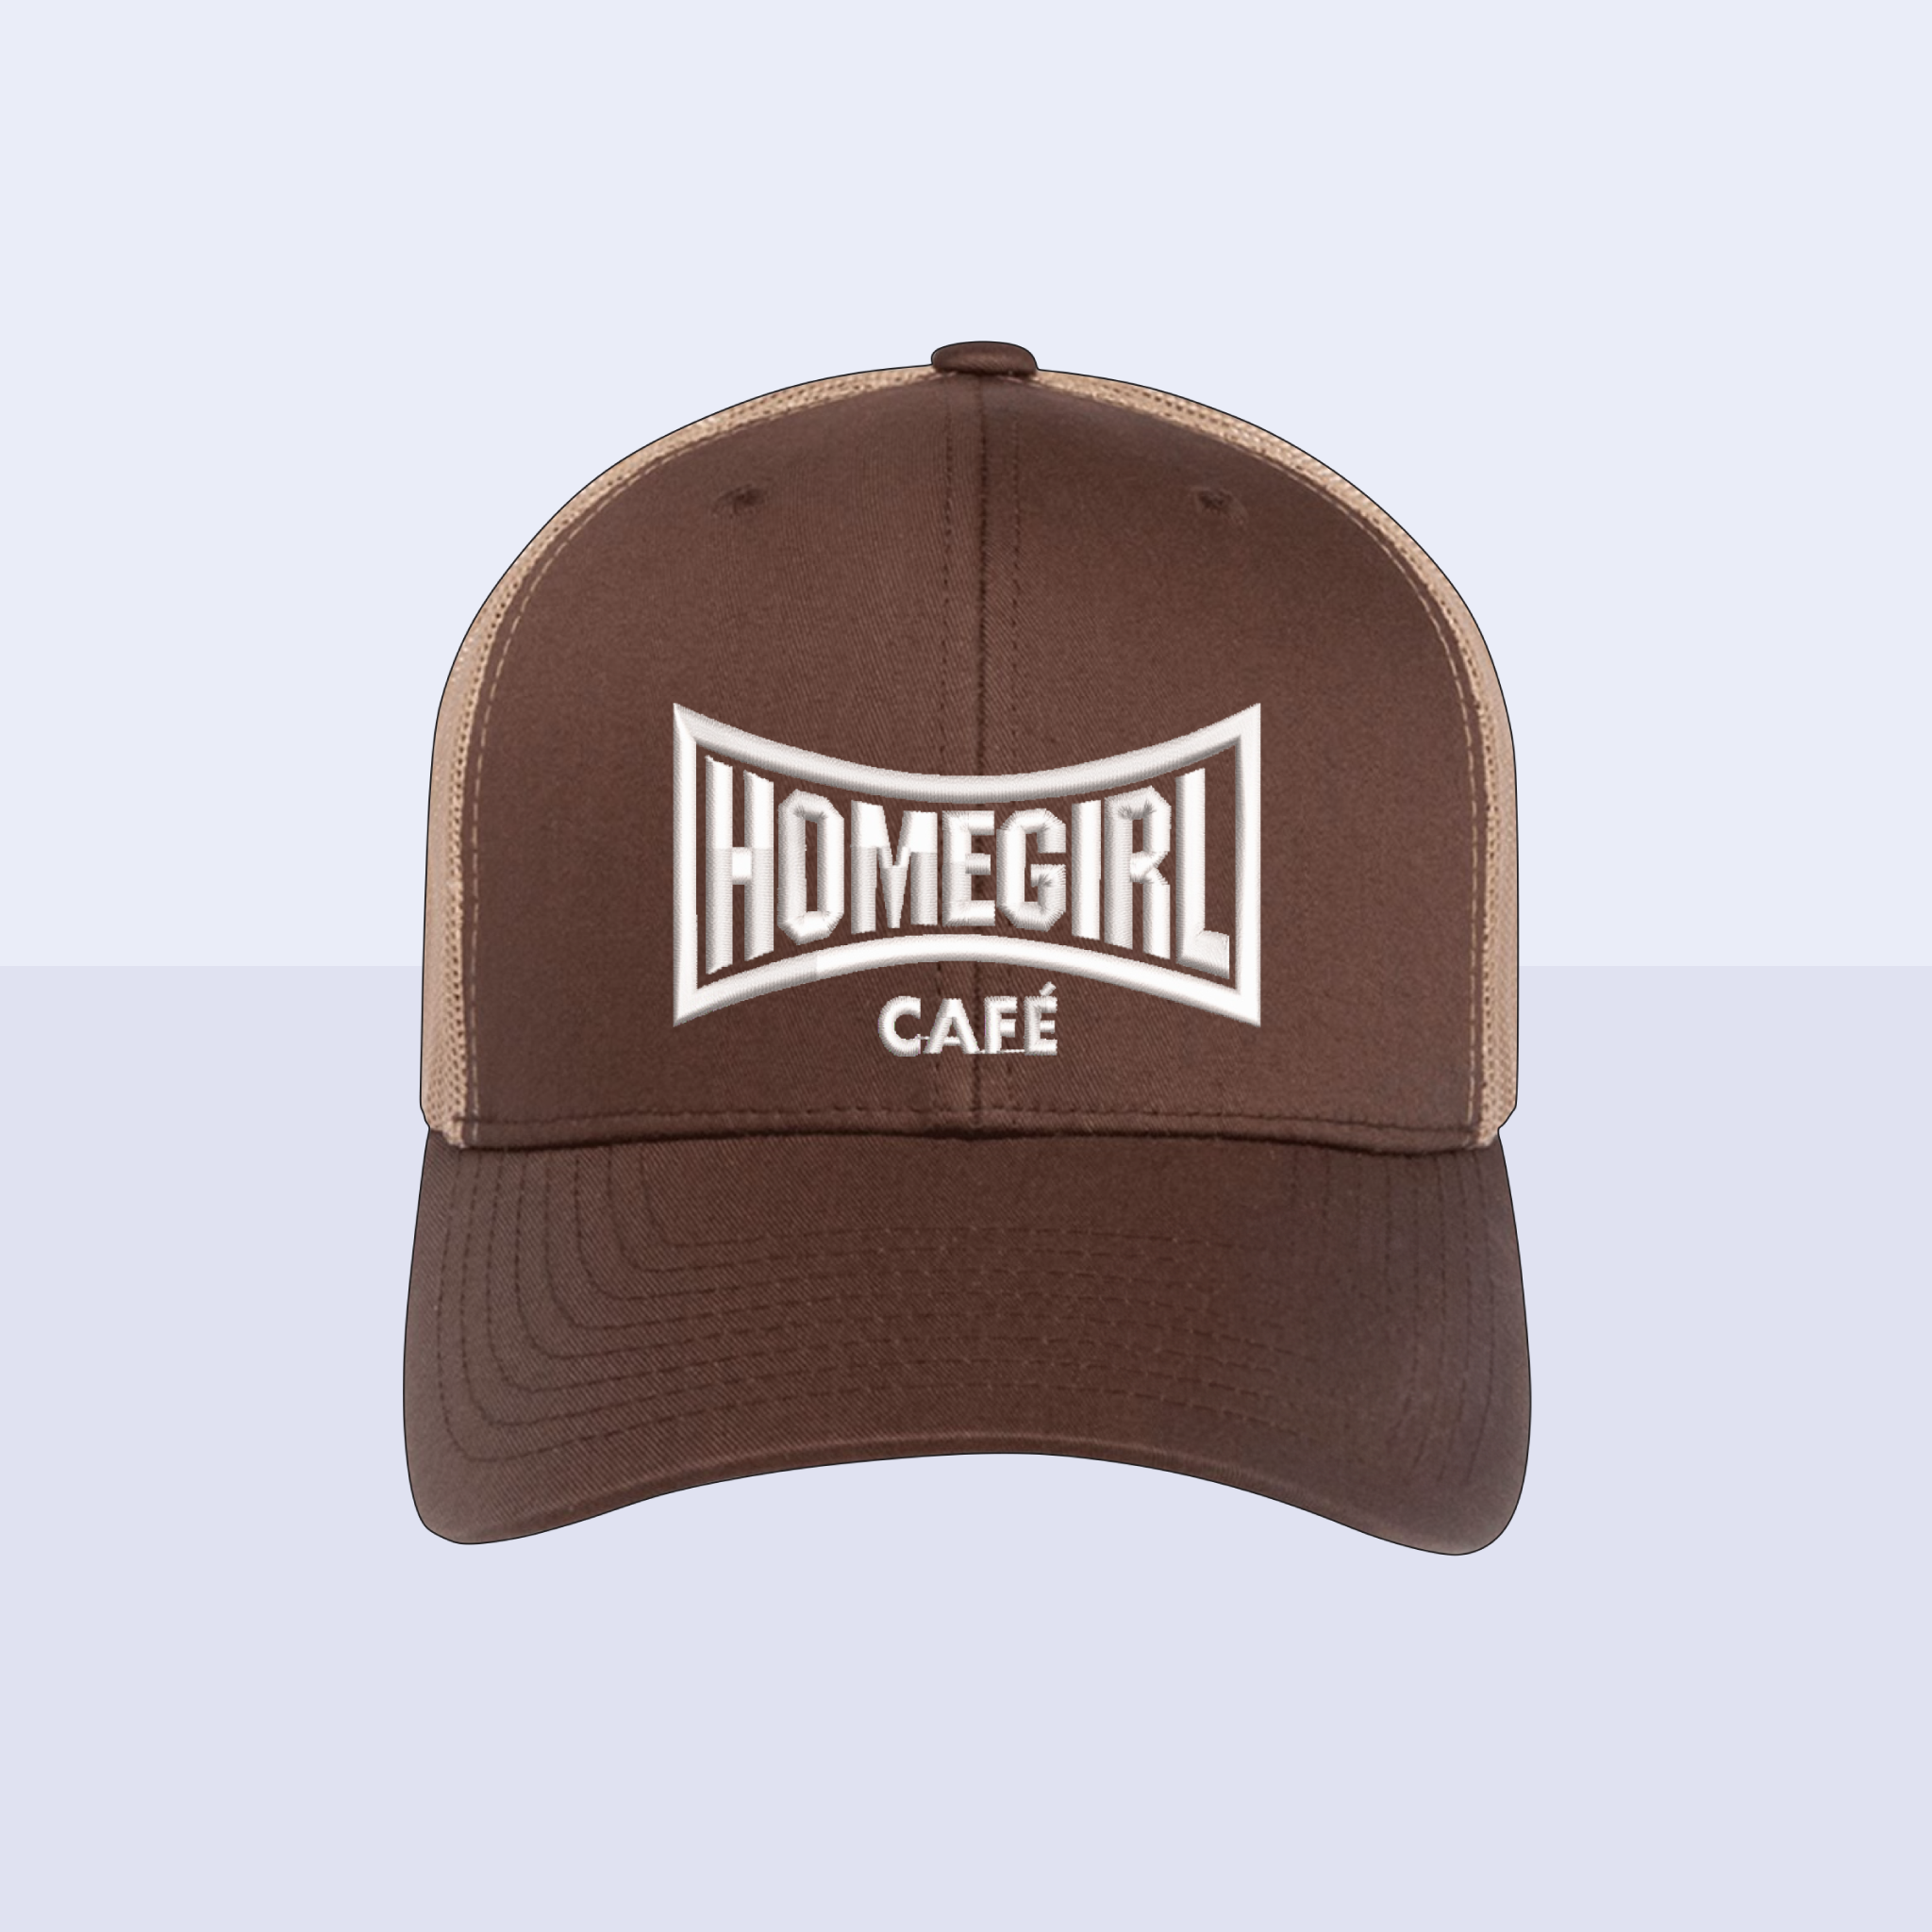 Homegirl Cafe Trucker Hat